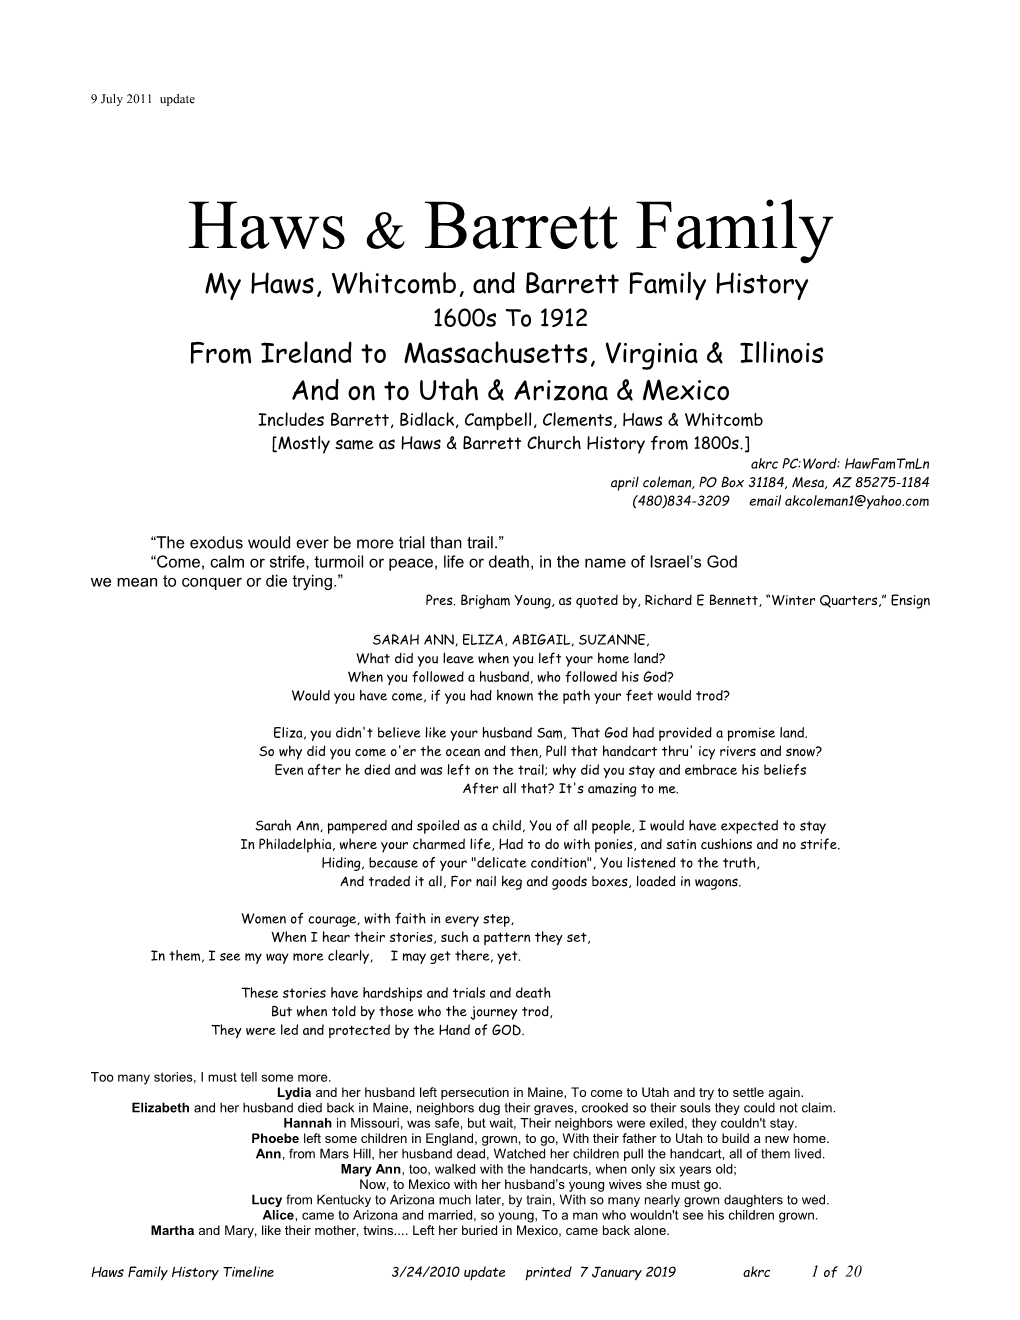 My Haws,Whitcomb, and Barrett Family History